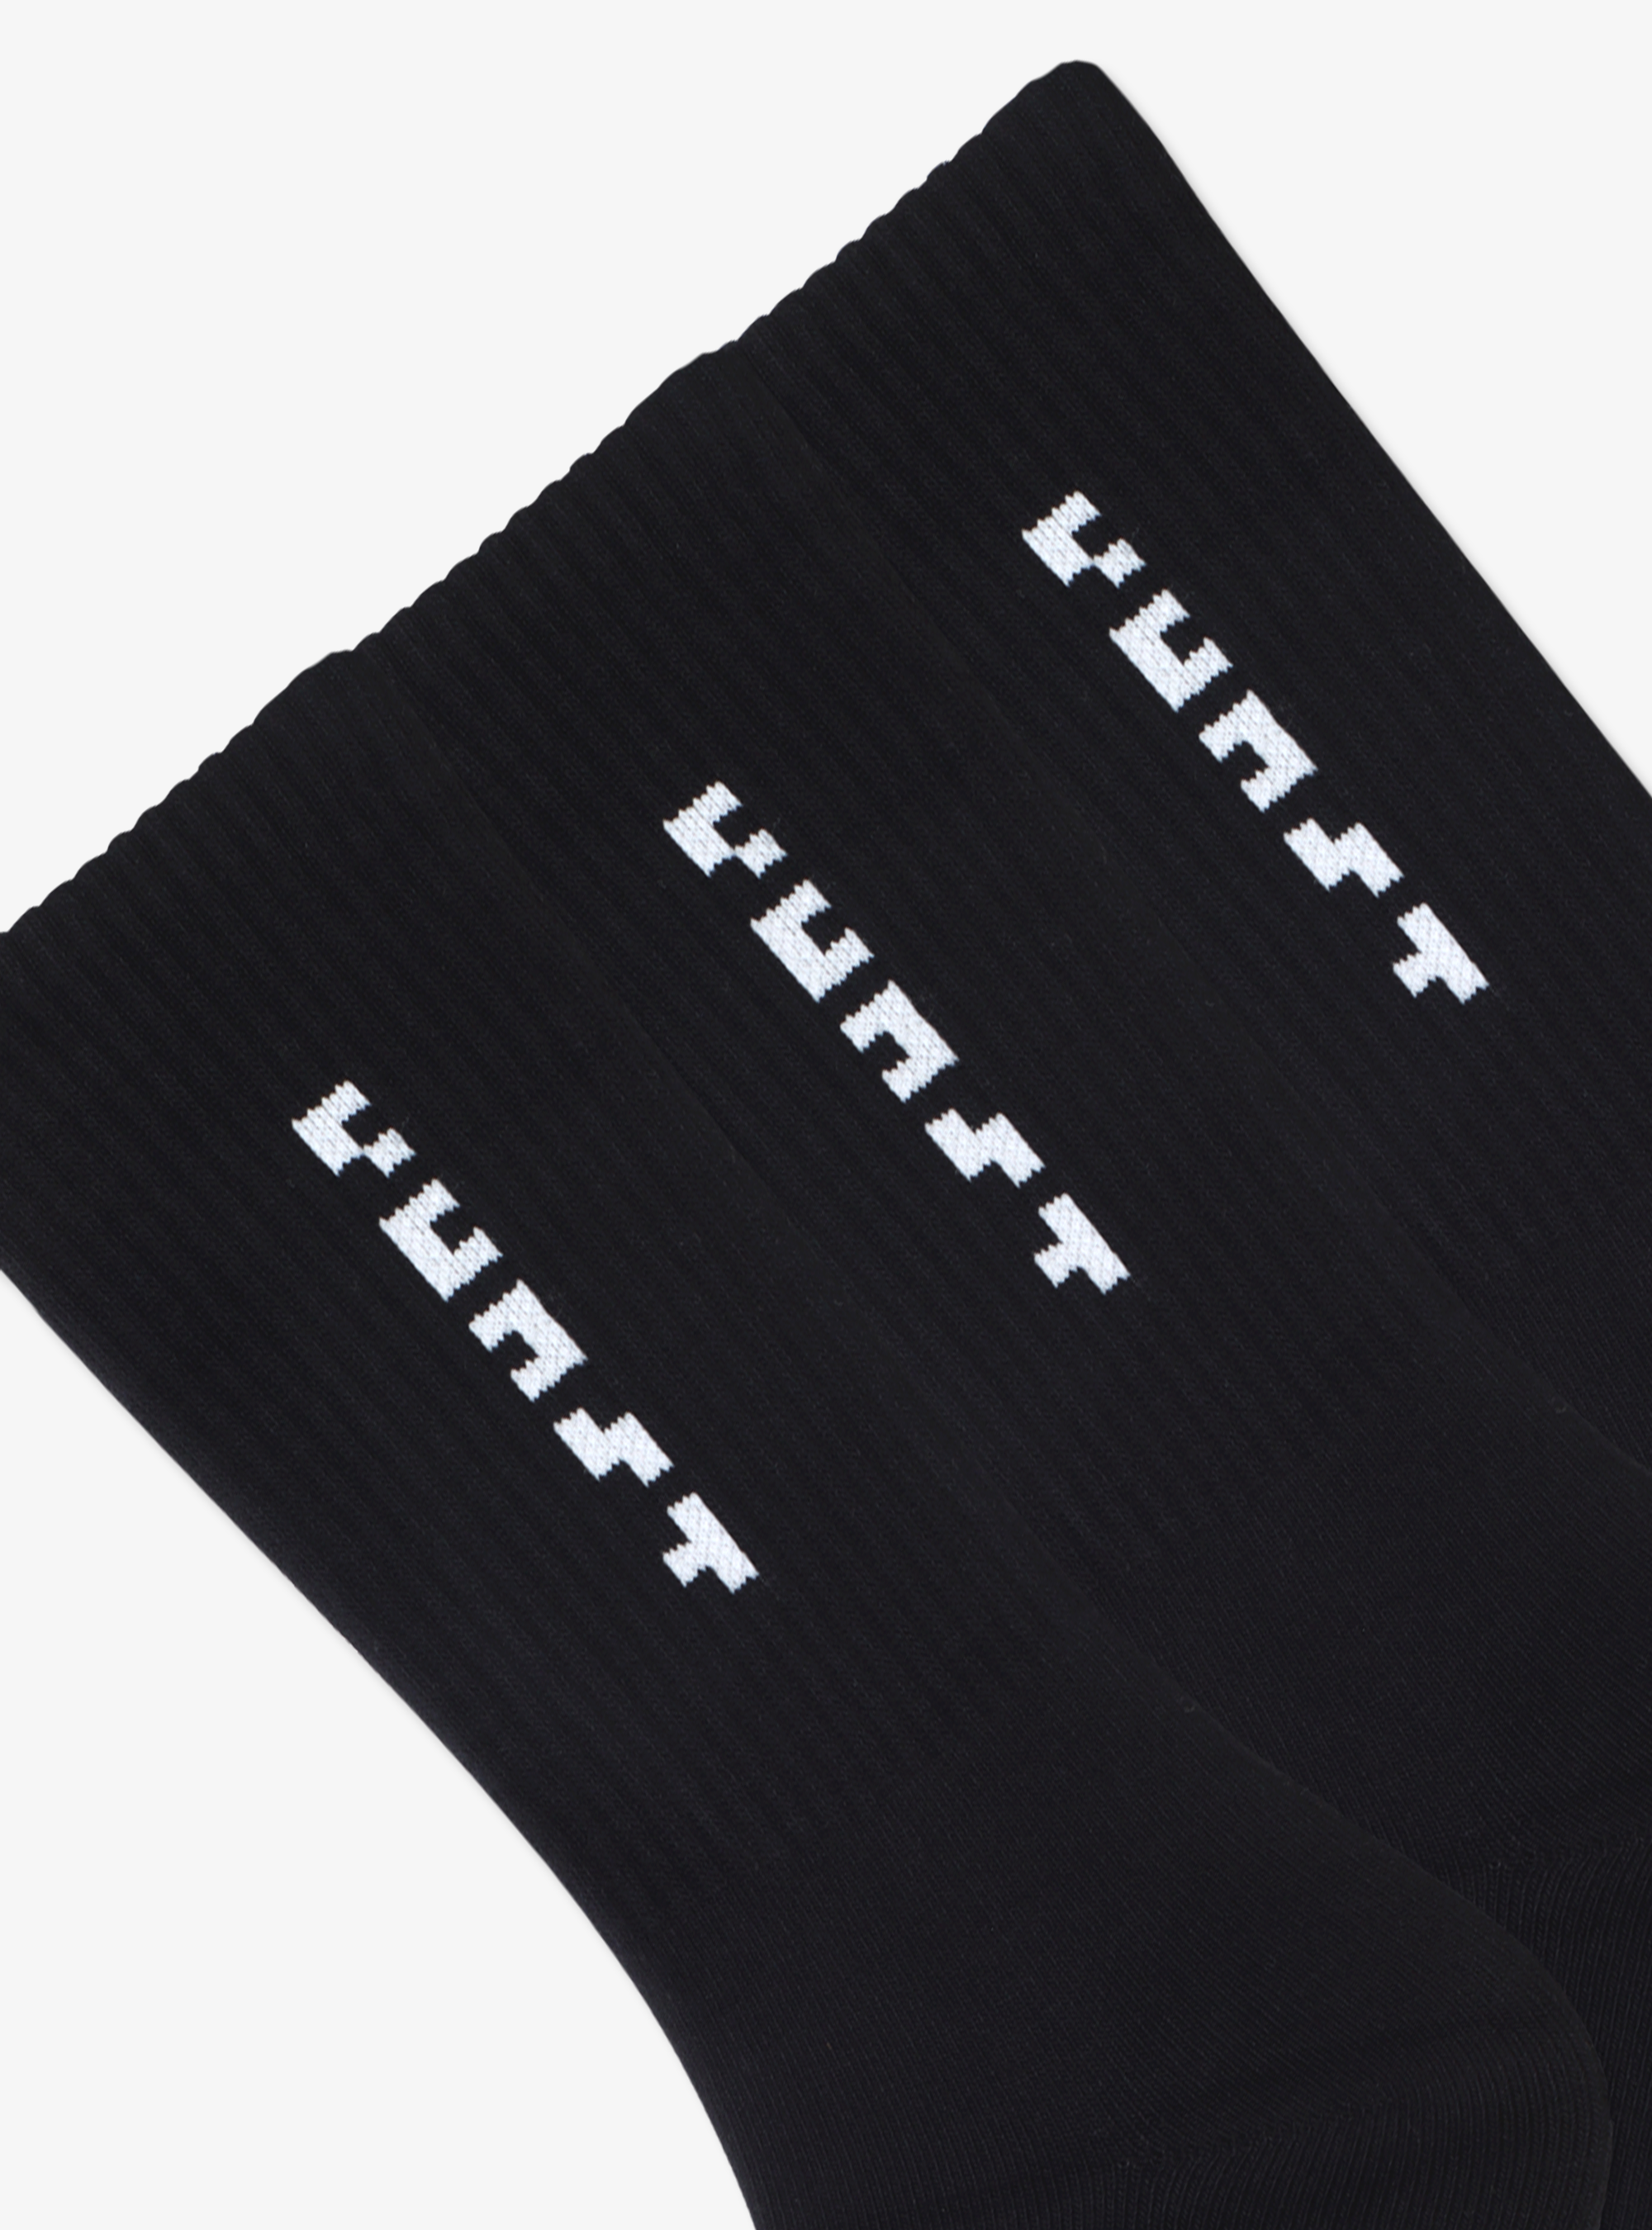 Pixel Series Sports Socks 3-Pack Black